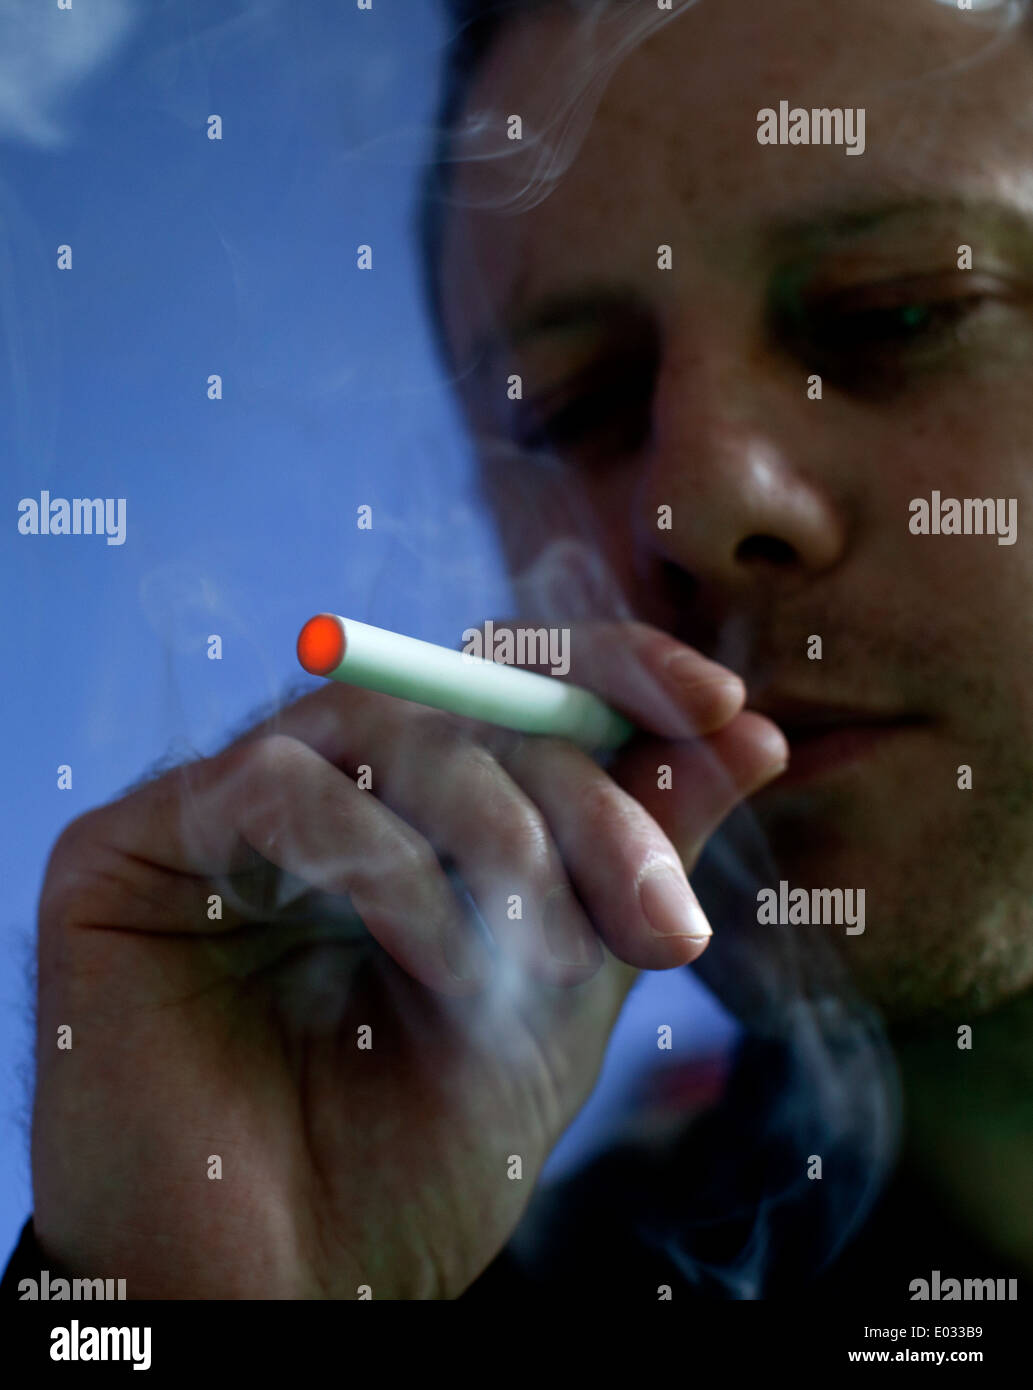 Man smoking a Puritane disposable e-cigarette, London MODEL RELEASED Stock Photo